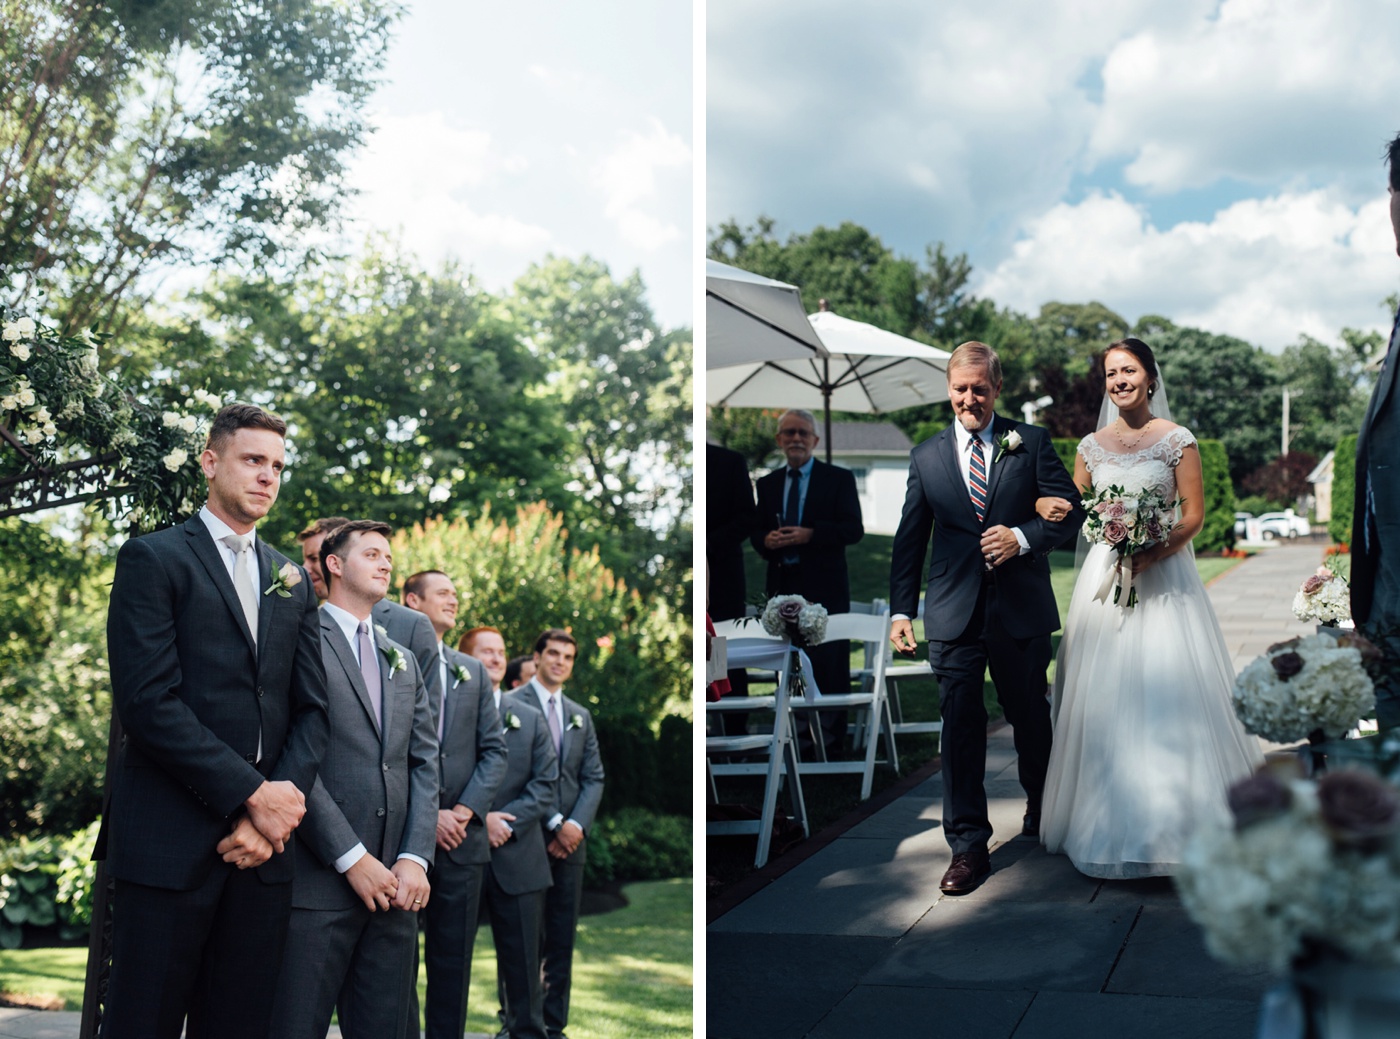 Liz + Matt - William Penn Inn - Gwynedd Pennsylvania Wedding Photographer - Alison Dunn Photography photo